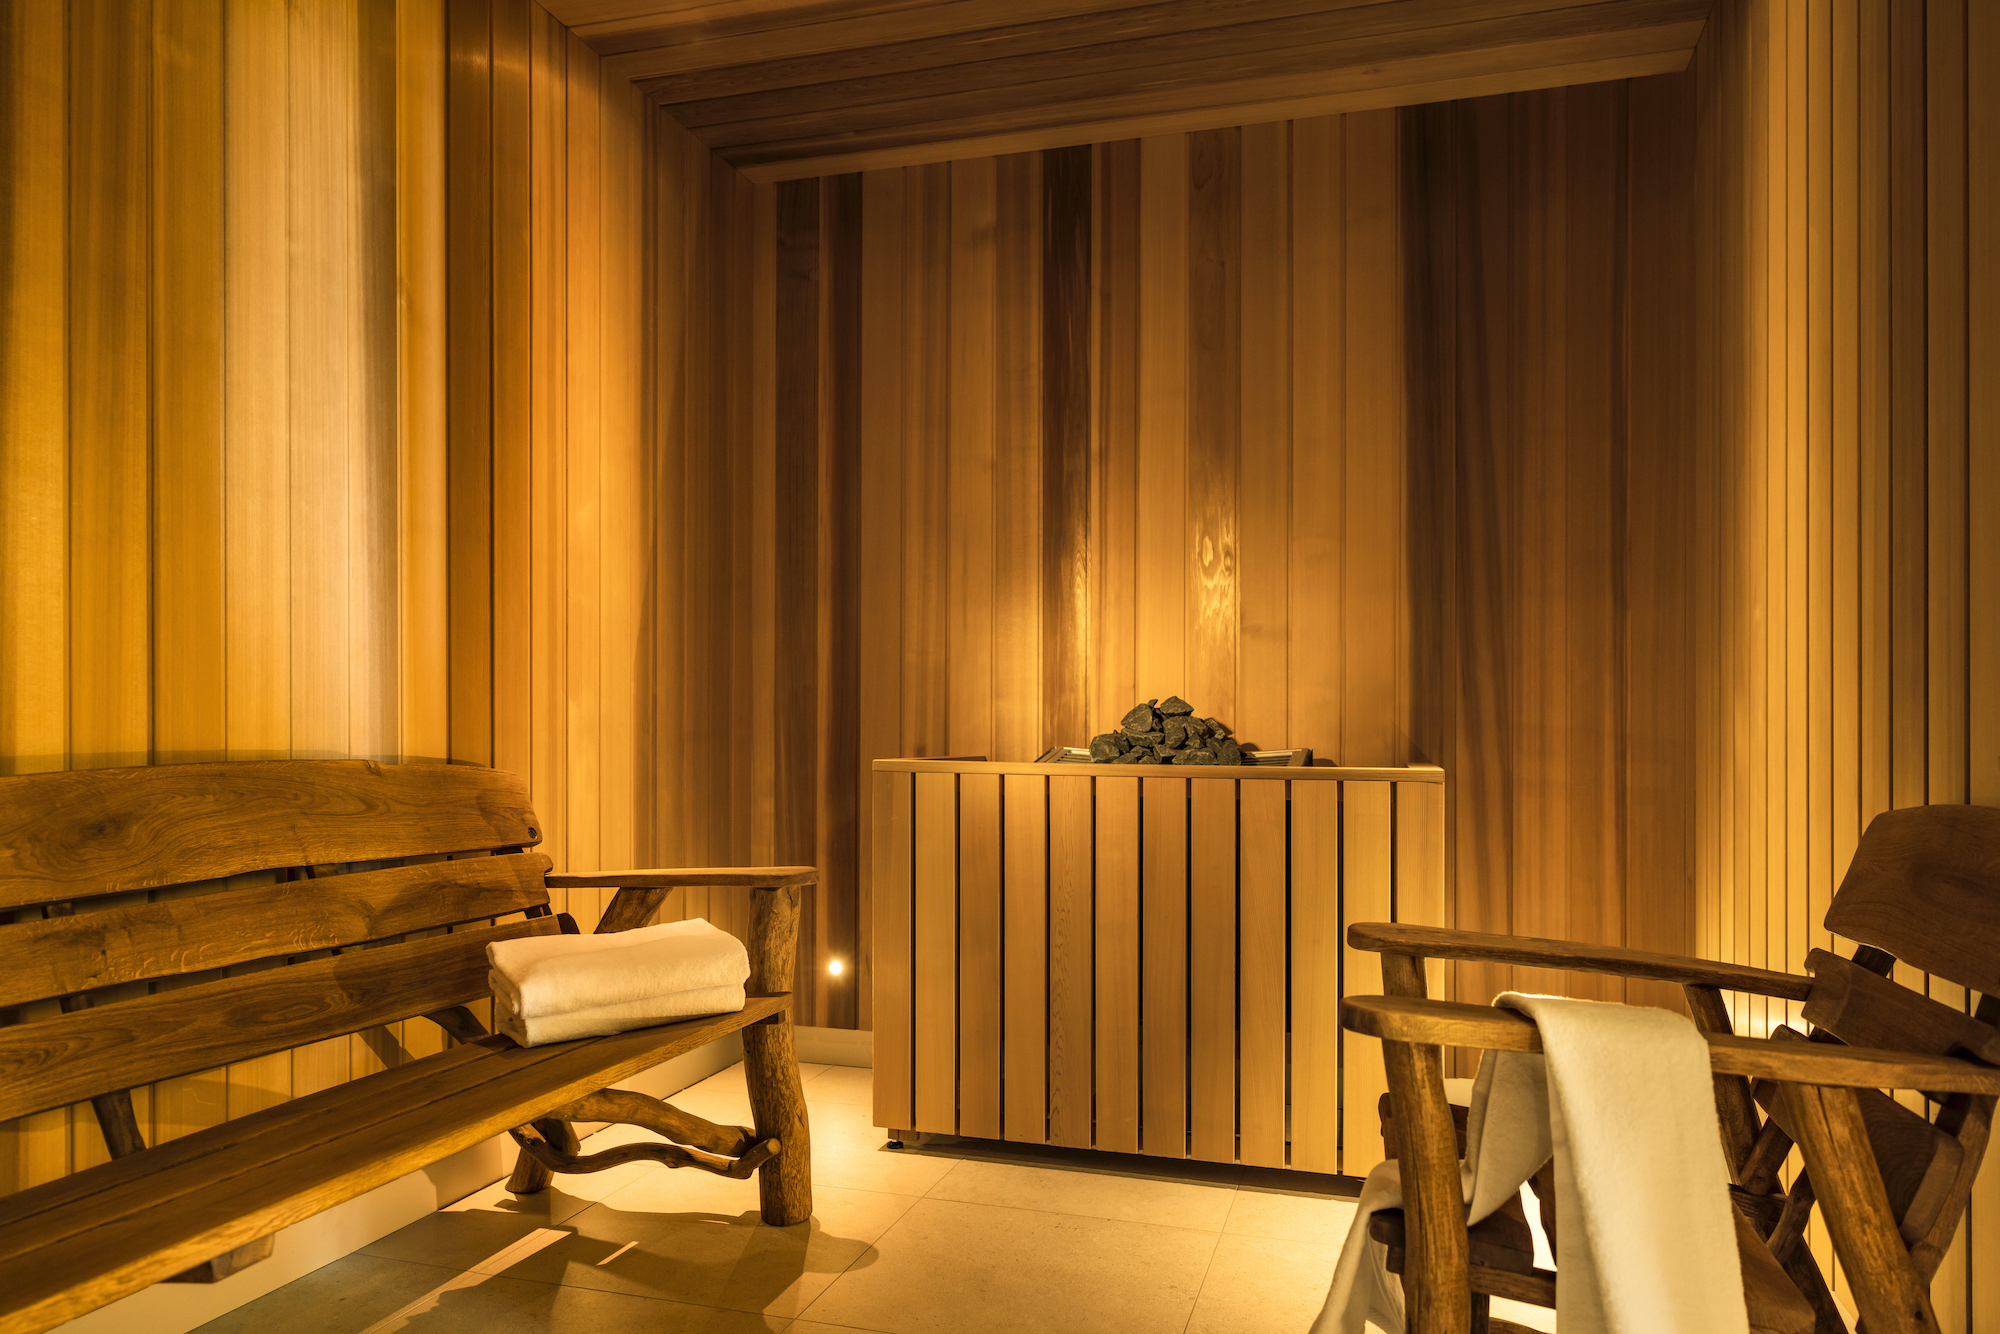 TOO Chill – a custom-made cedarwood sauna at TOO Hotel in Paris